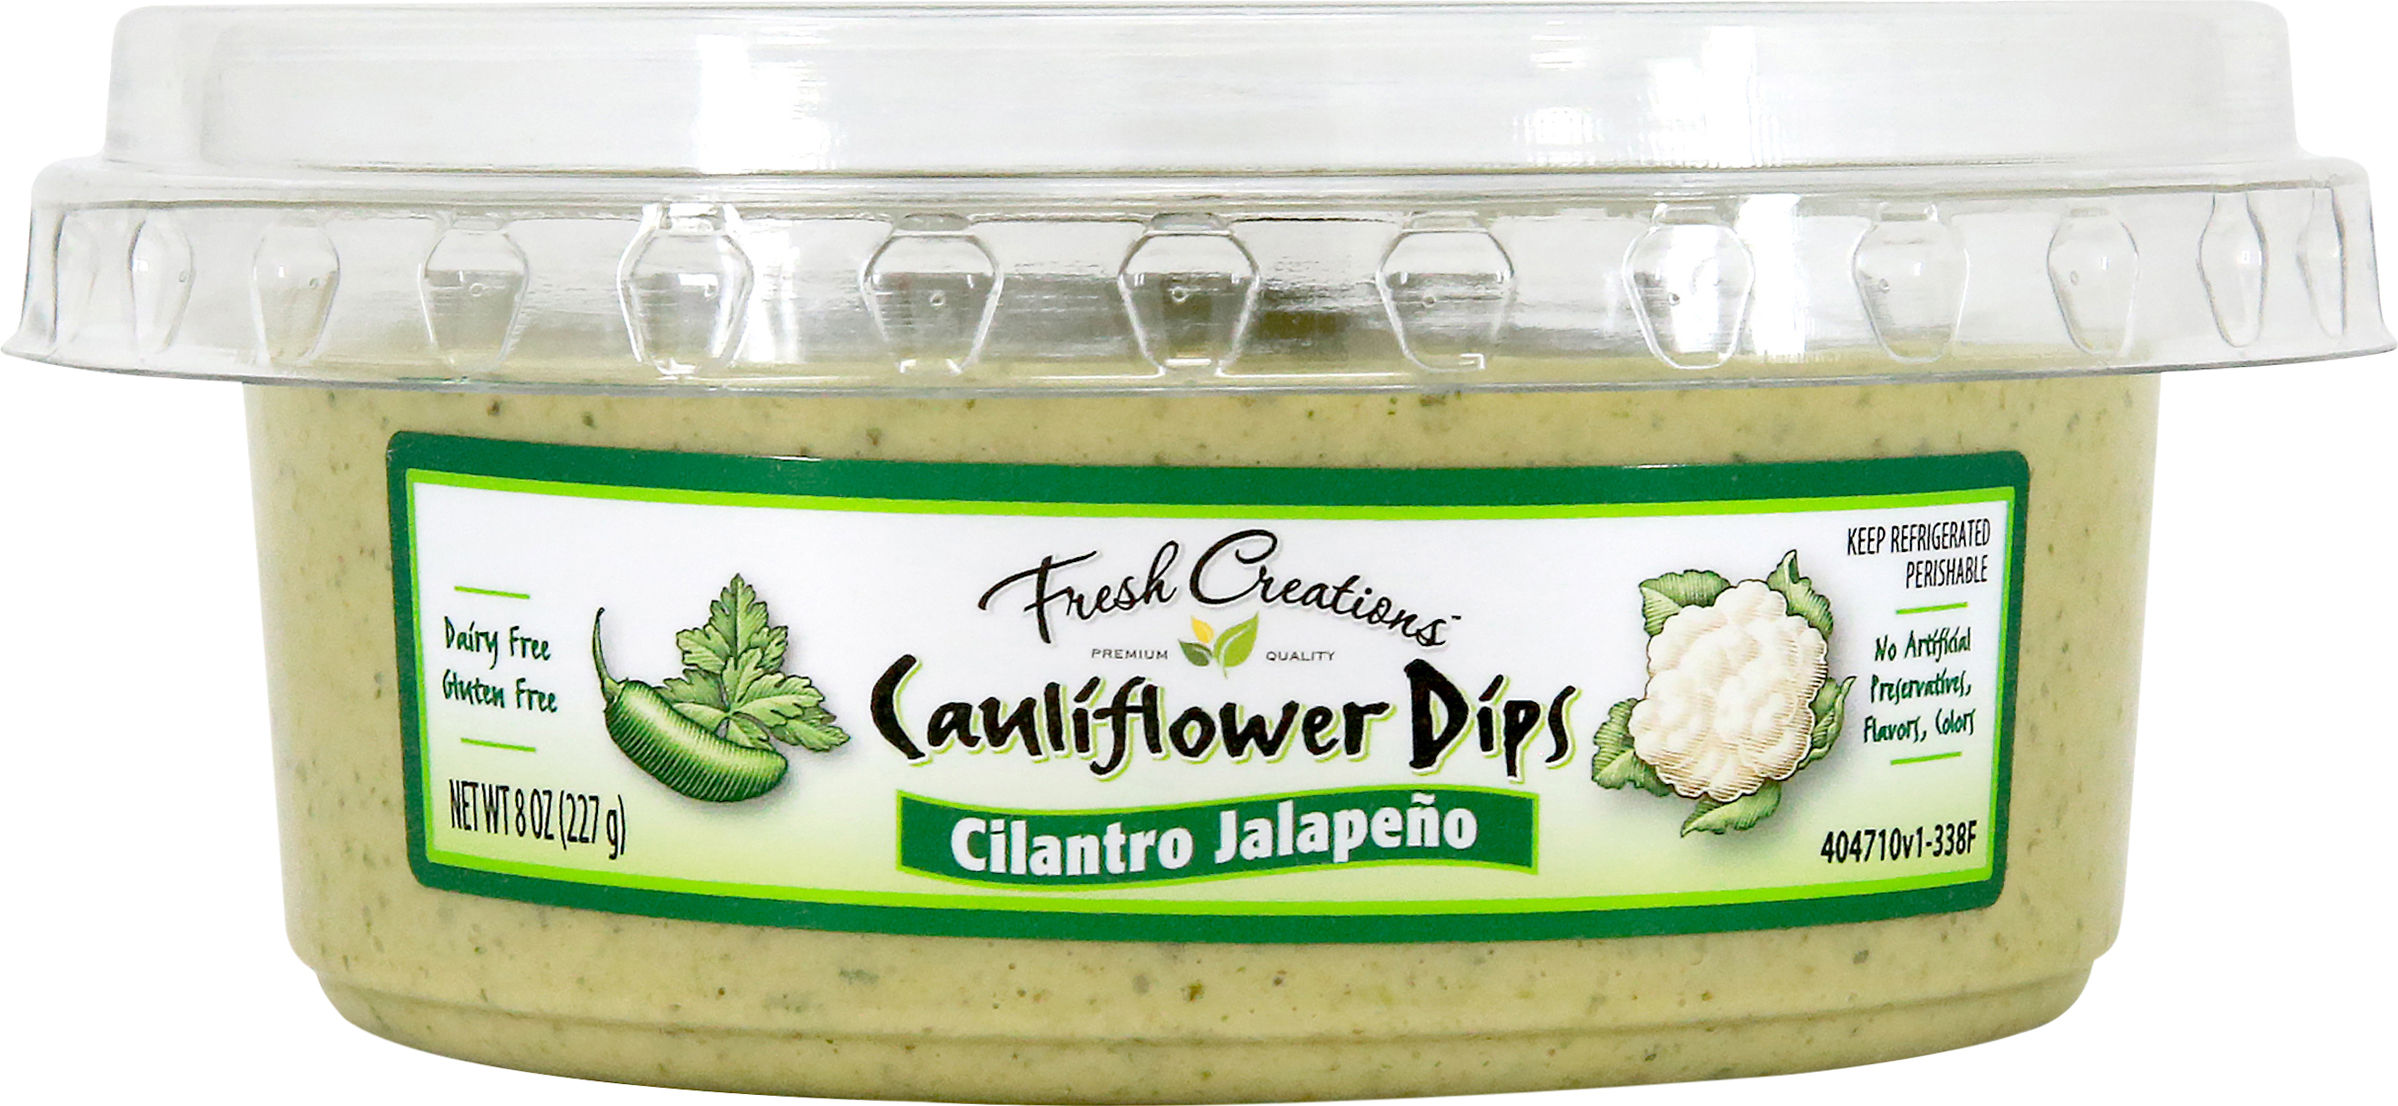 Cauliflower Dips, Cilantro Jalapeno image